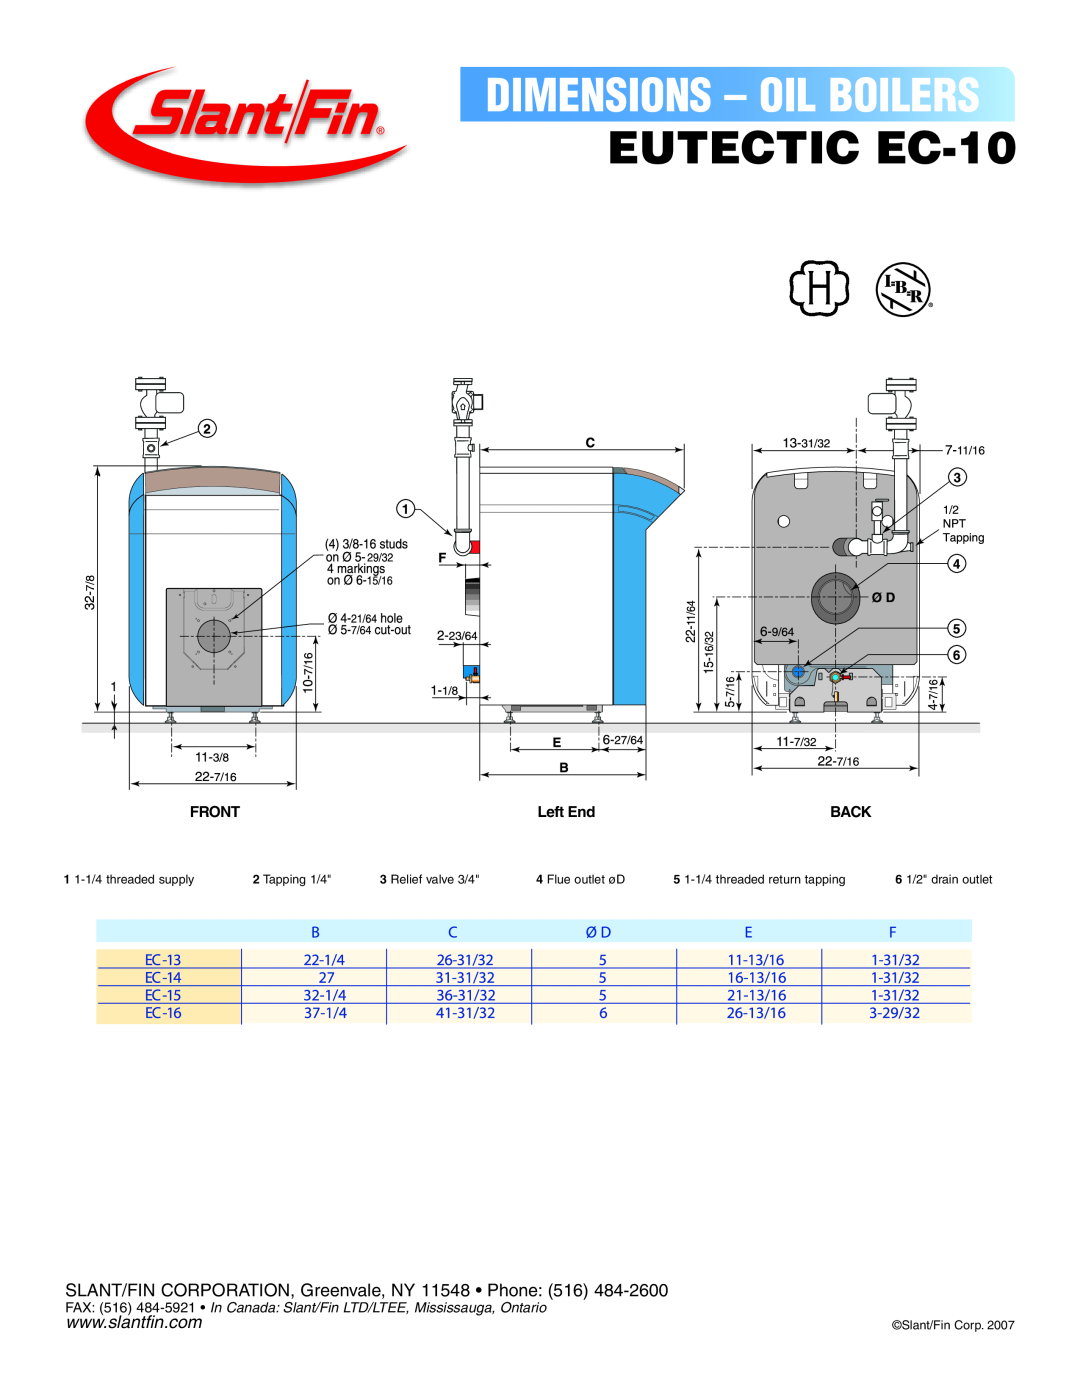 Slant/Fin Eutectic EC10) dimensions EUTECTIC EC-10, Dimensions - Oil Boilers, Front, Left End, Back, Tapping 1/4 